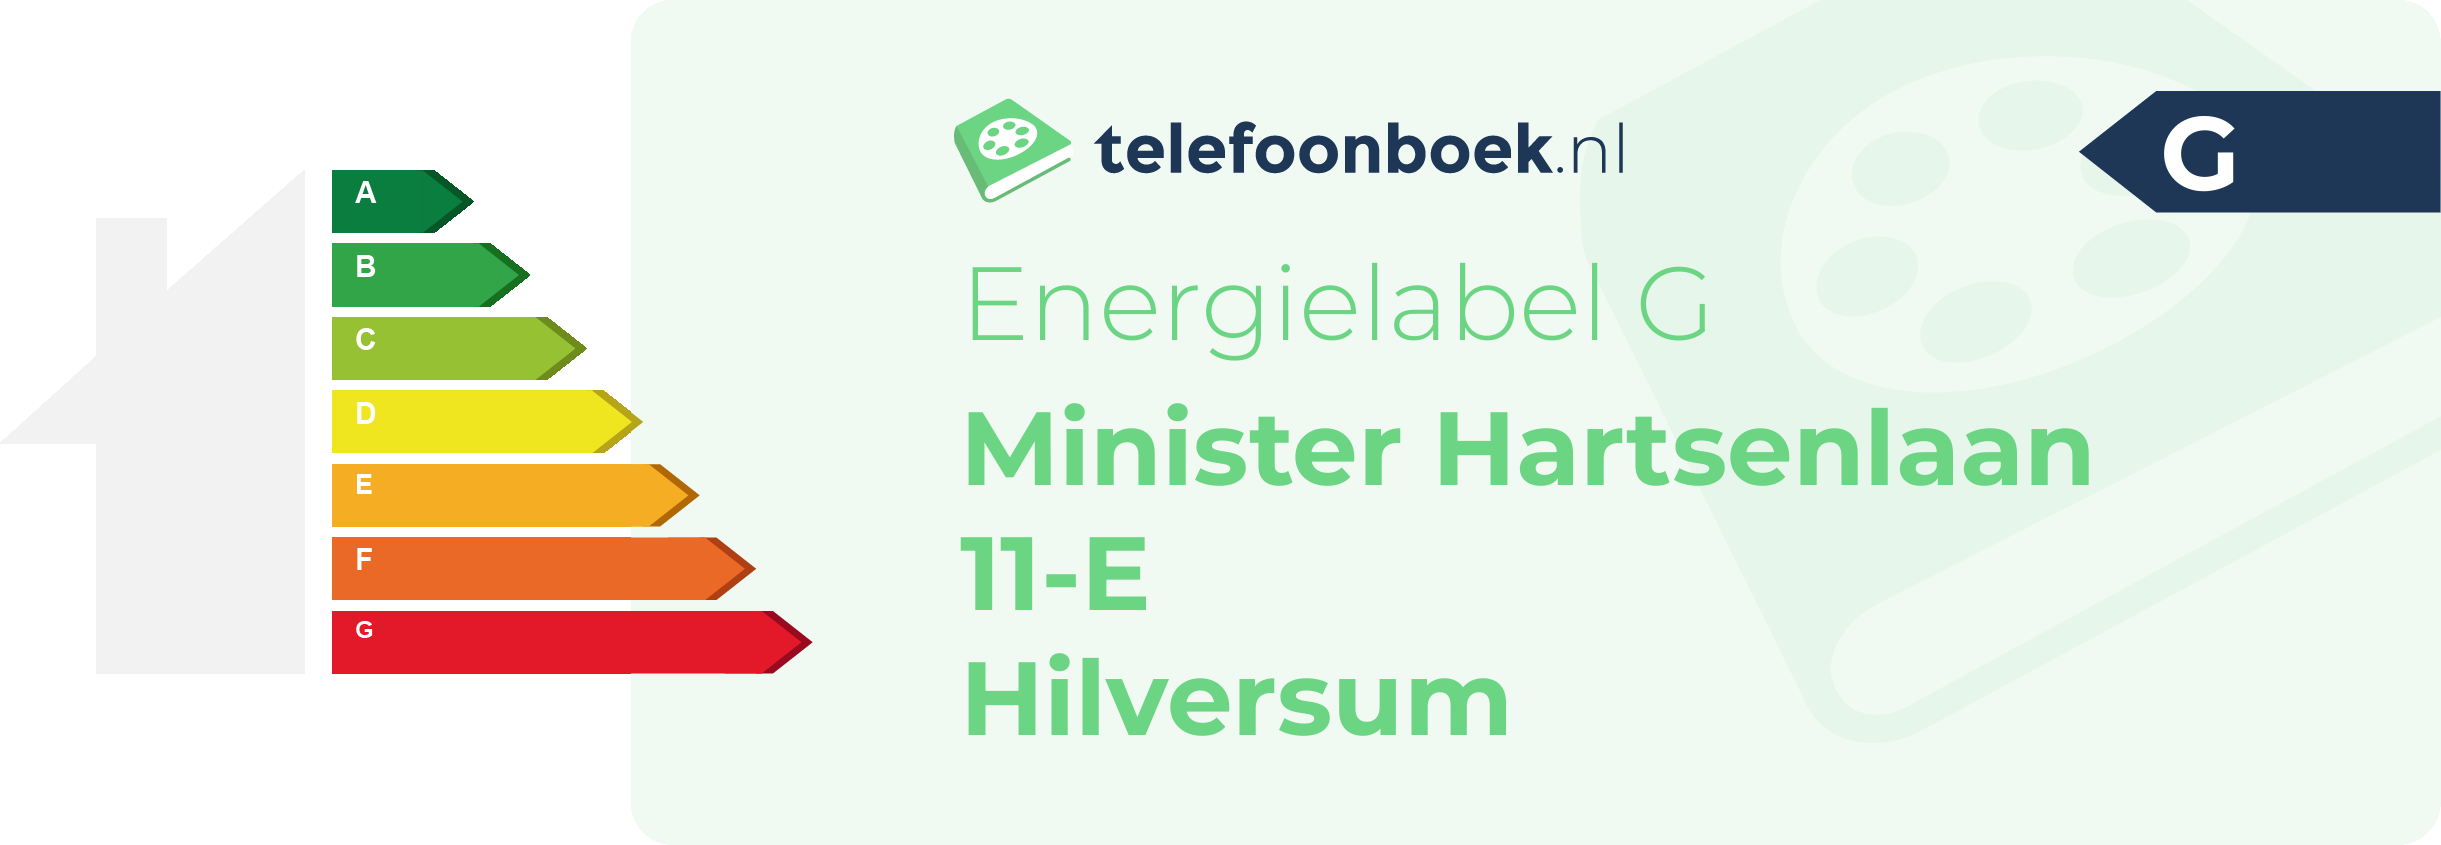 Energielabel Minister Hartsenlaan 11-E Hilversum